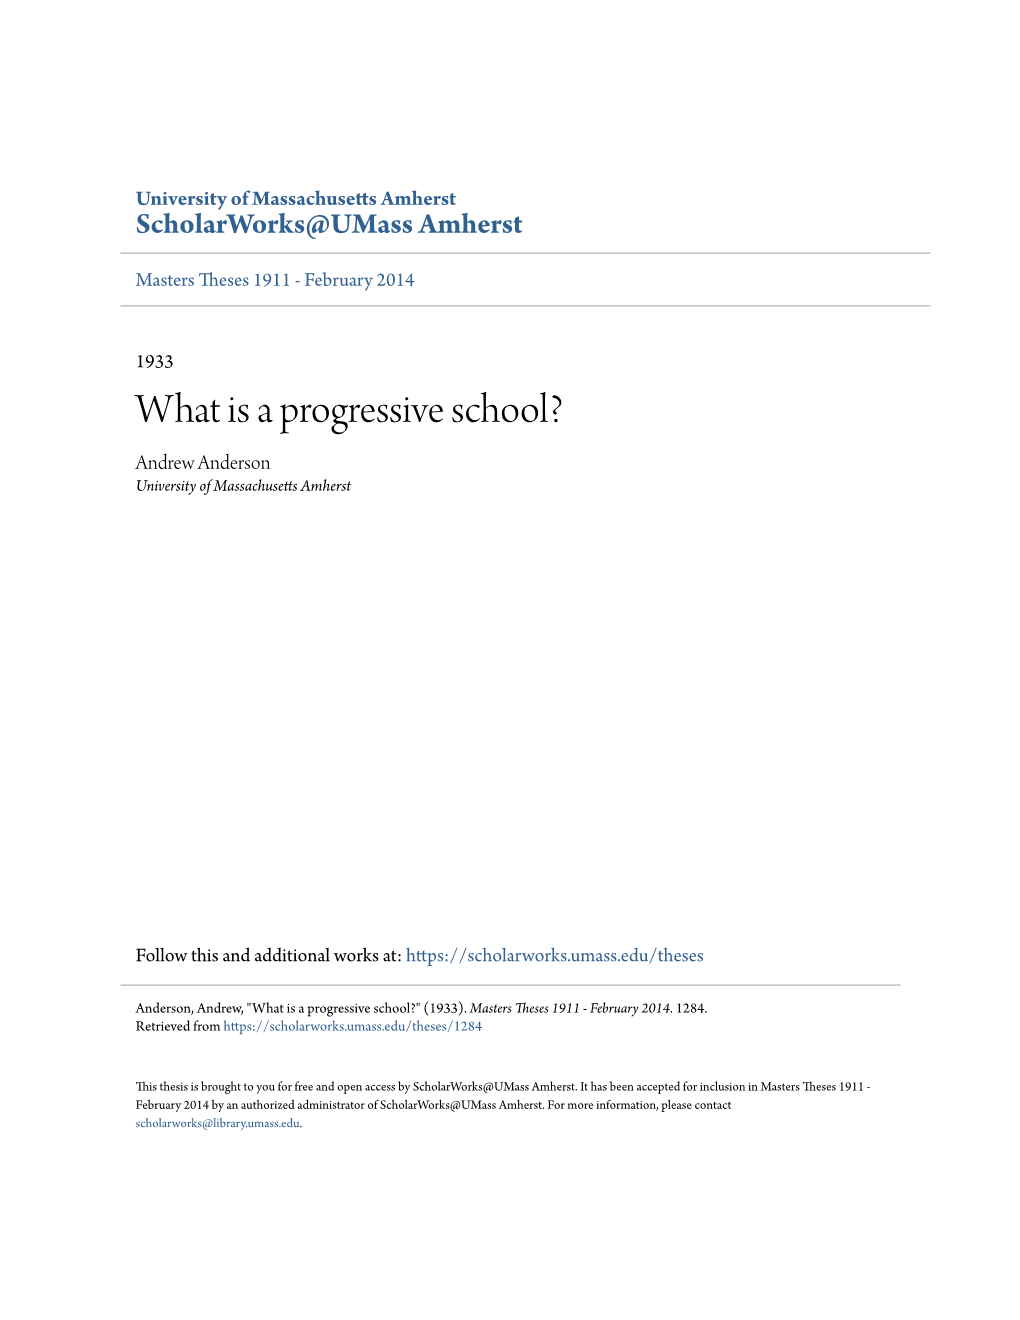 What Is a Progressive School? Andrew Anderson University of Massachusetts Amherst